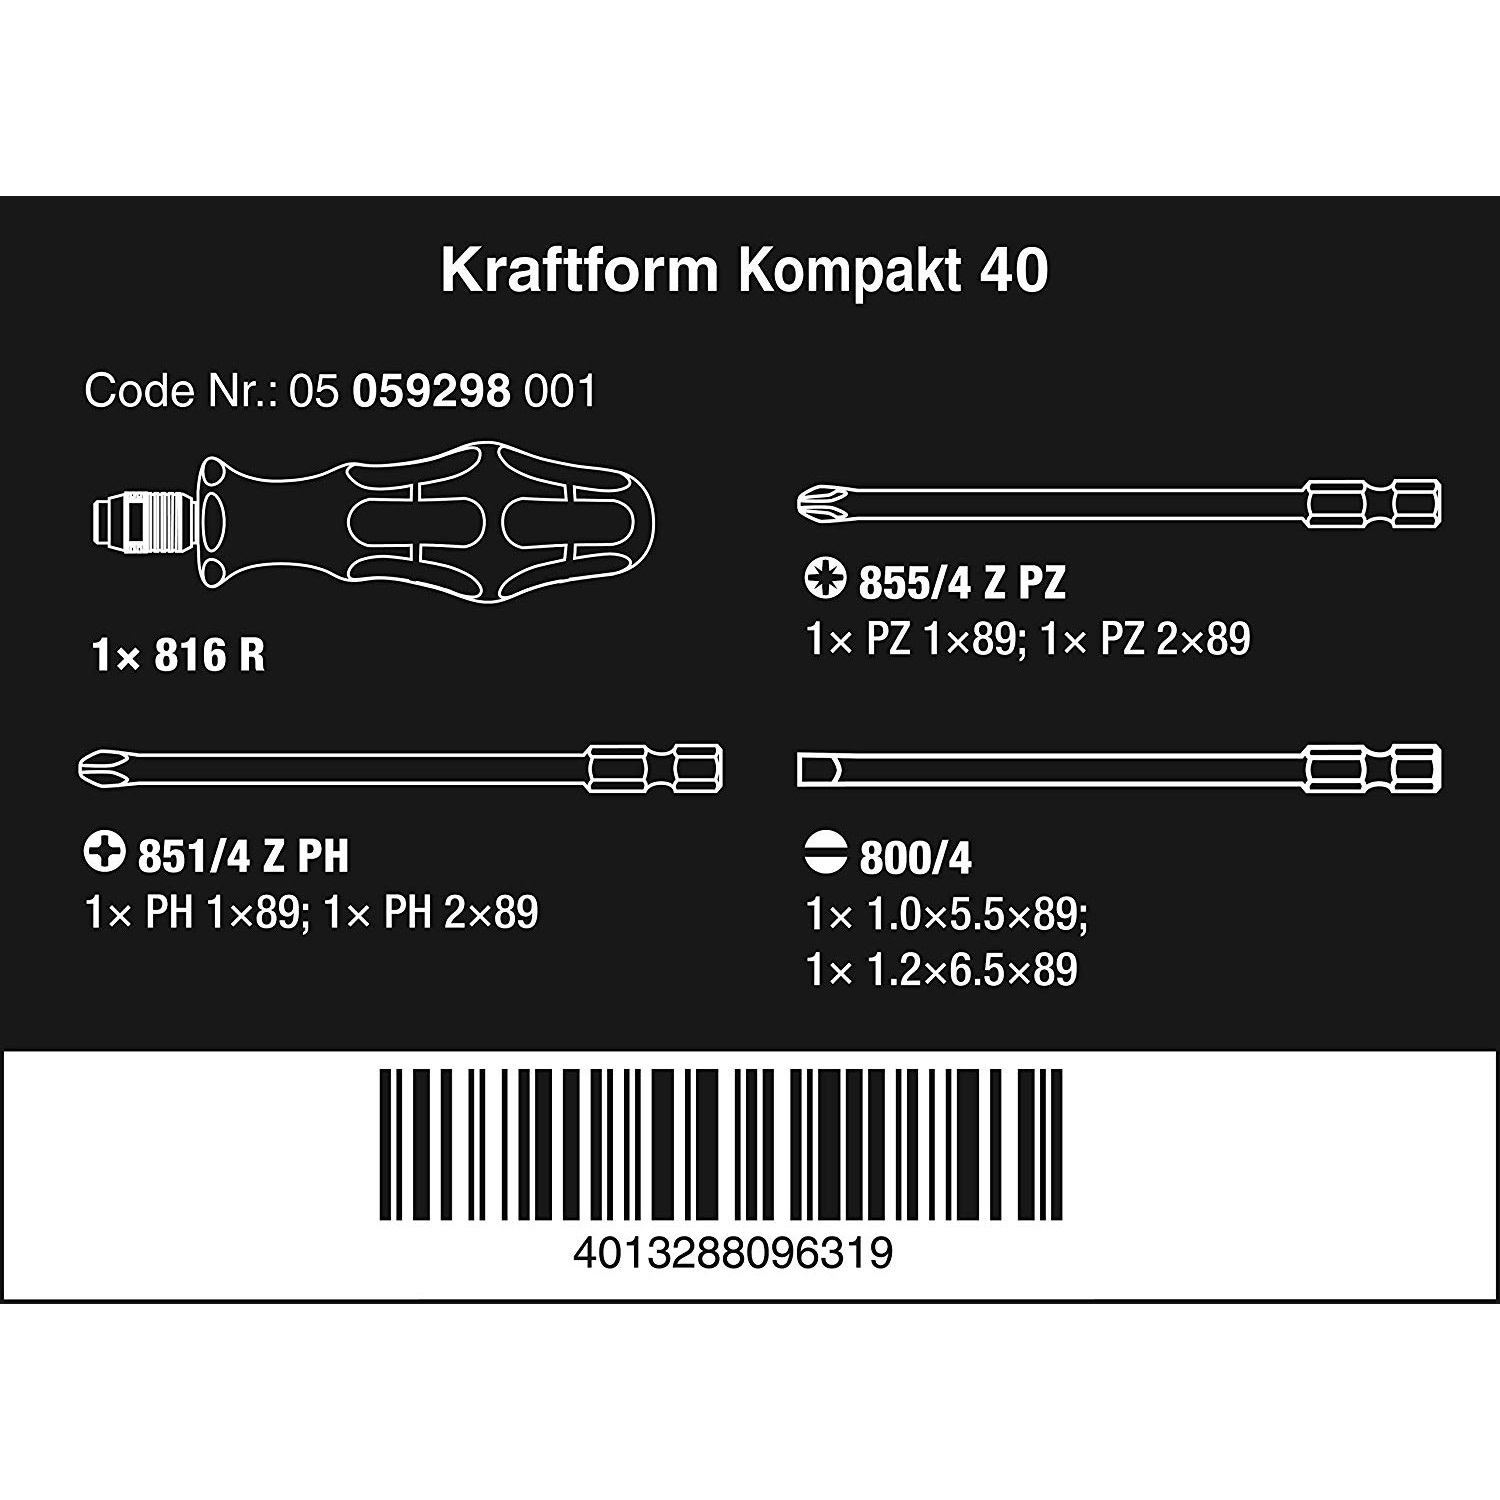 Bộ dụng cụ Kraftform Kompakt 40 gồm 7 cái mã Wera 05059298001